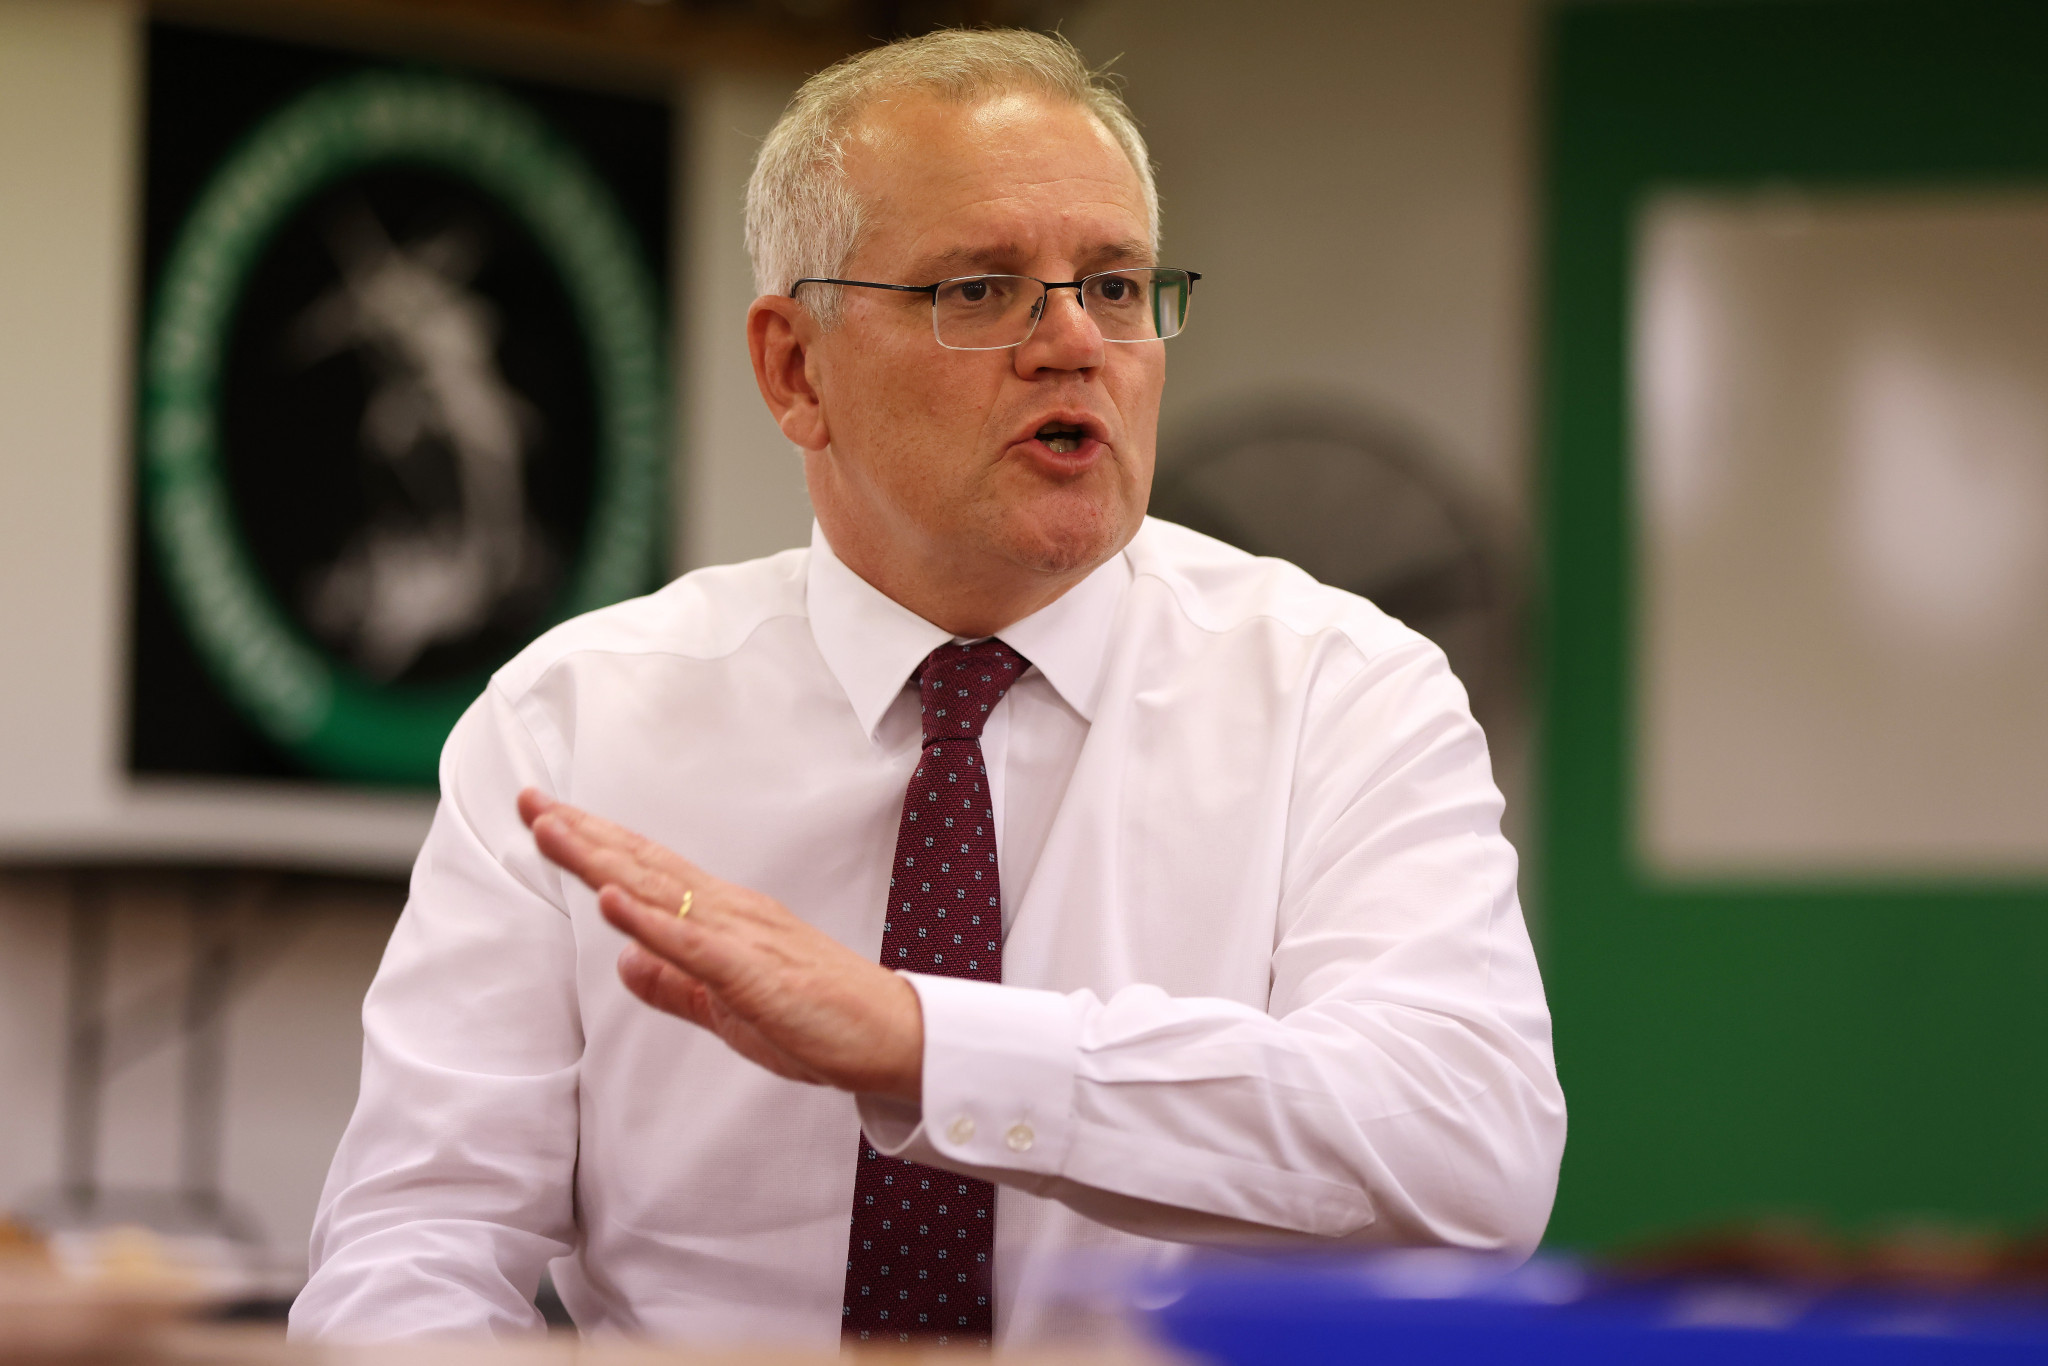 Federal Government key to Brisbane 2032 bid success, claims Morrison